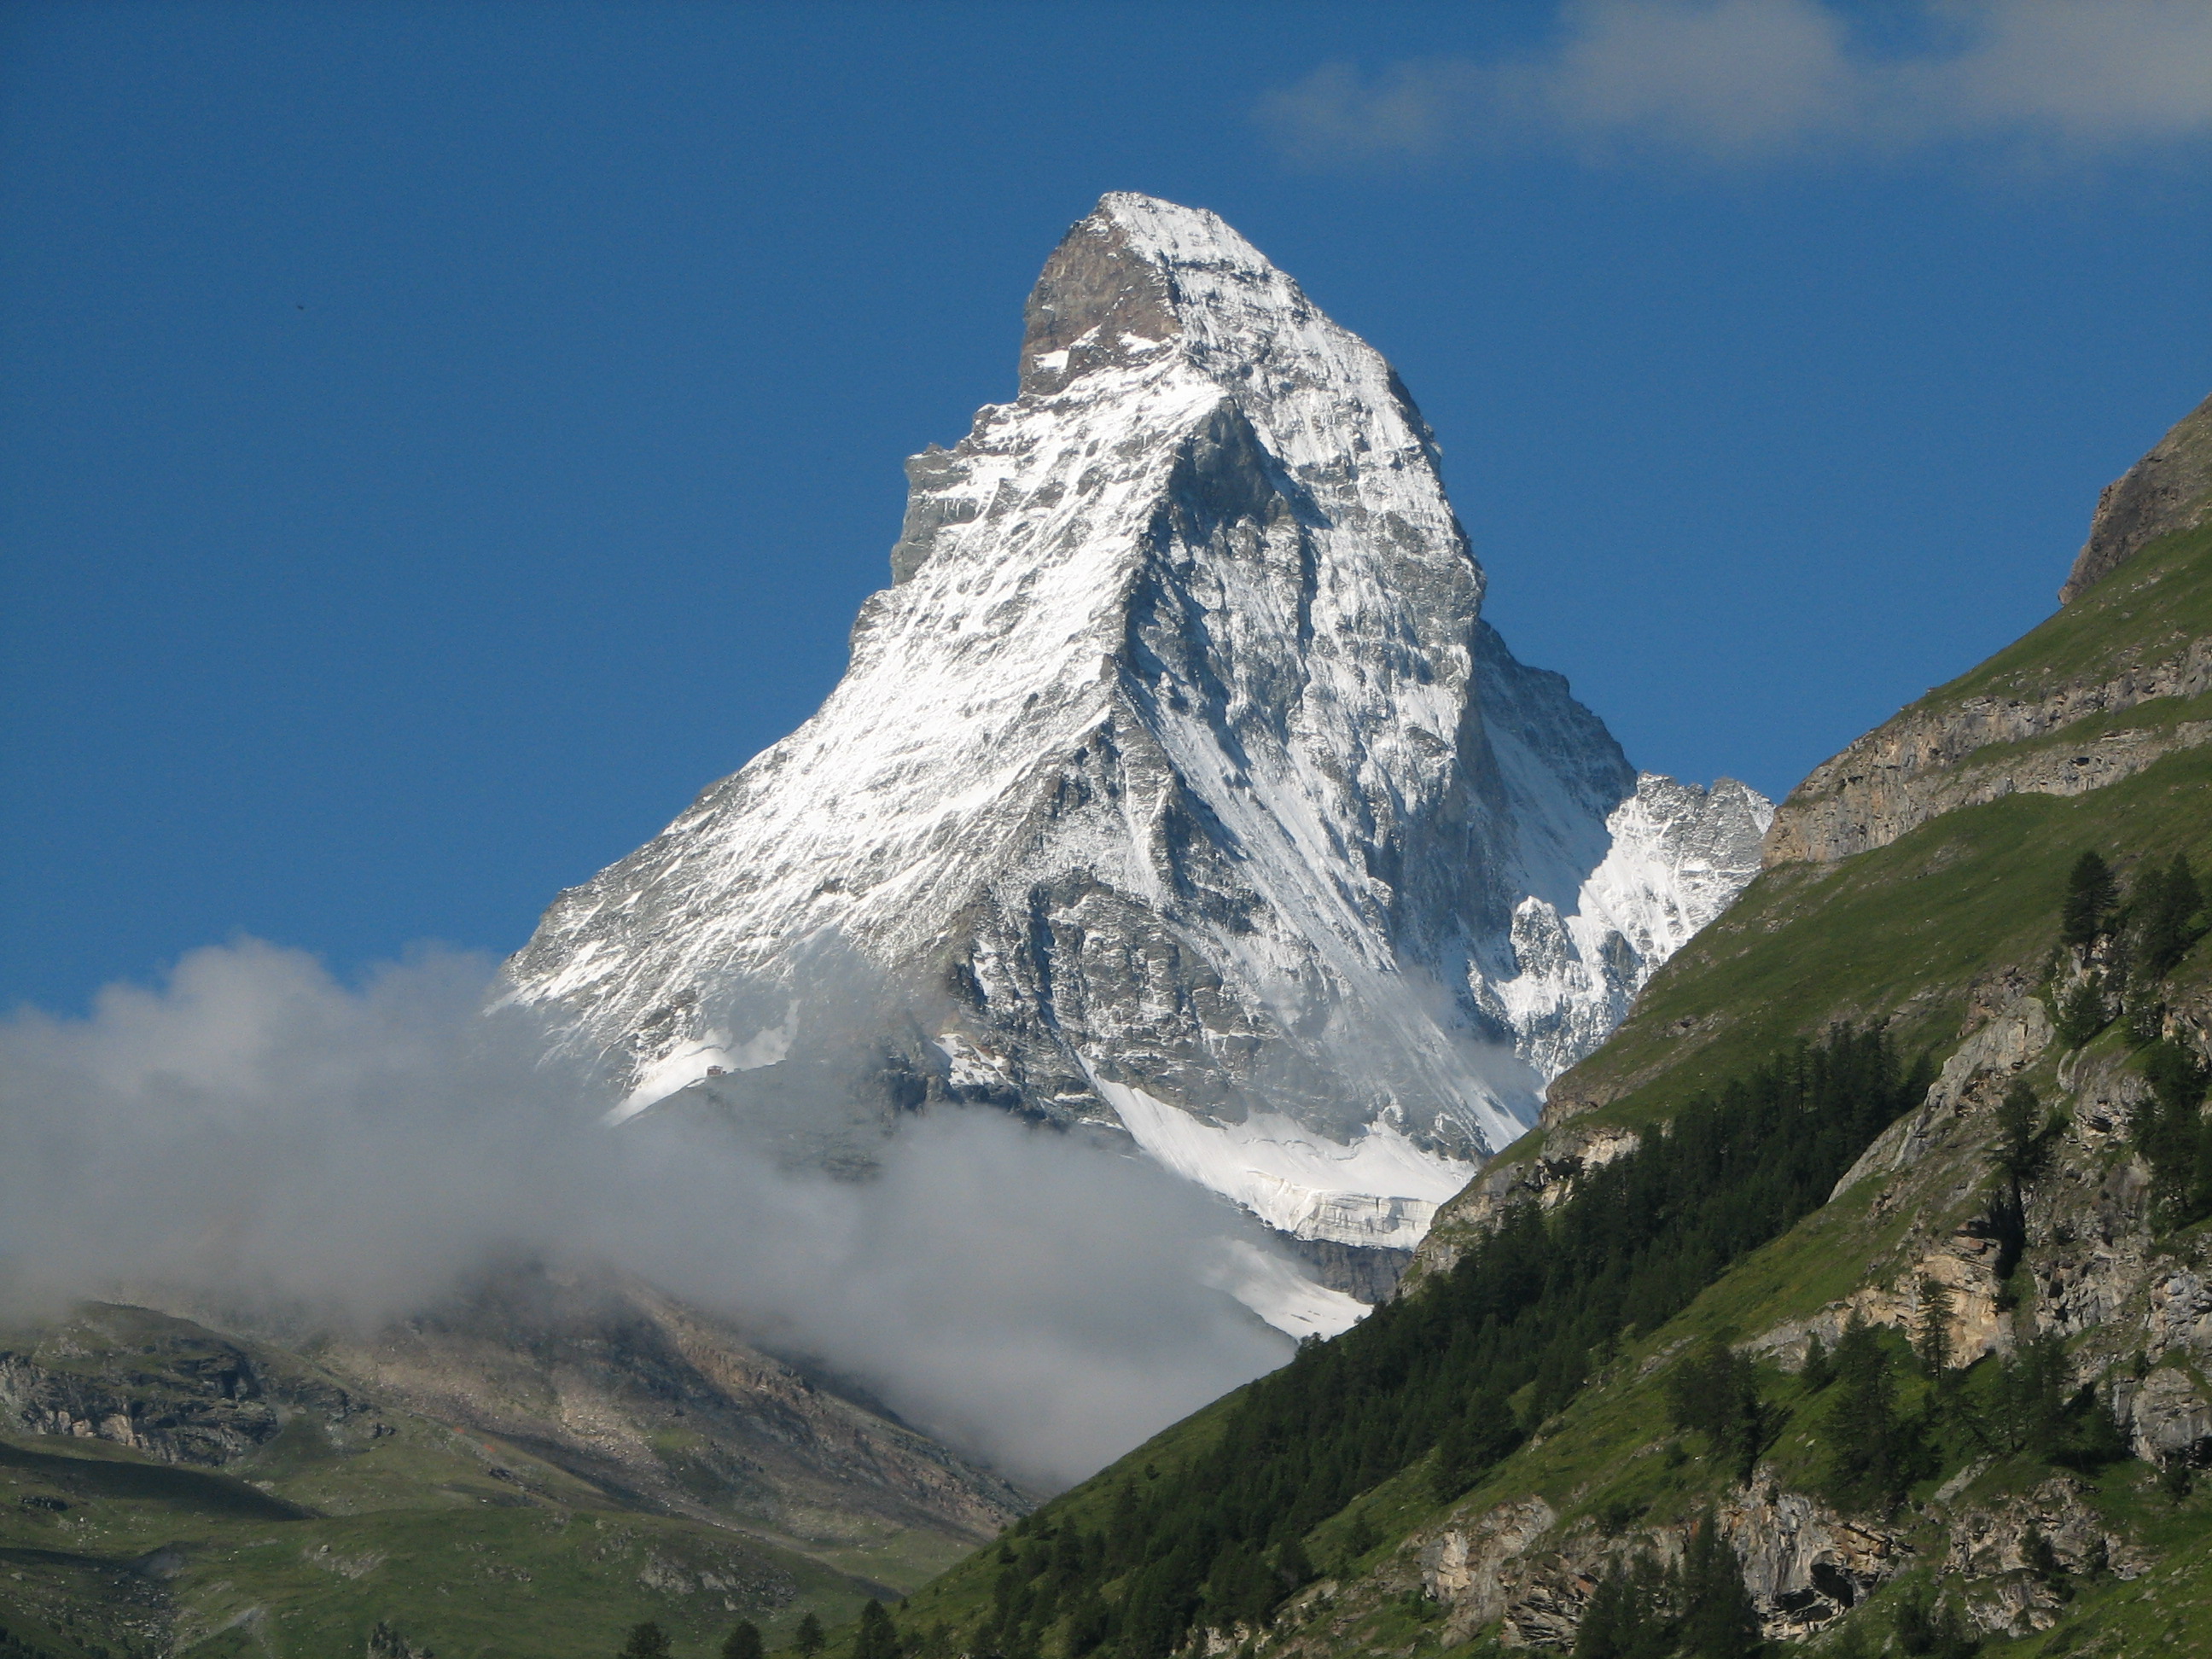 File:Matterhorn from Switzerland.jpg - Wikimedia Commons